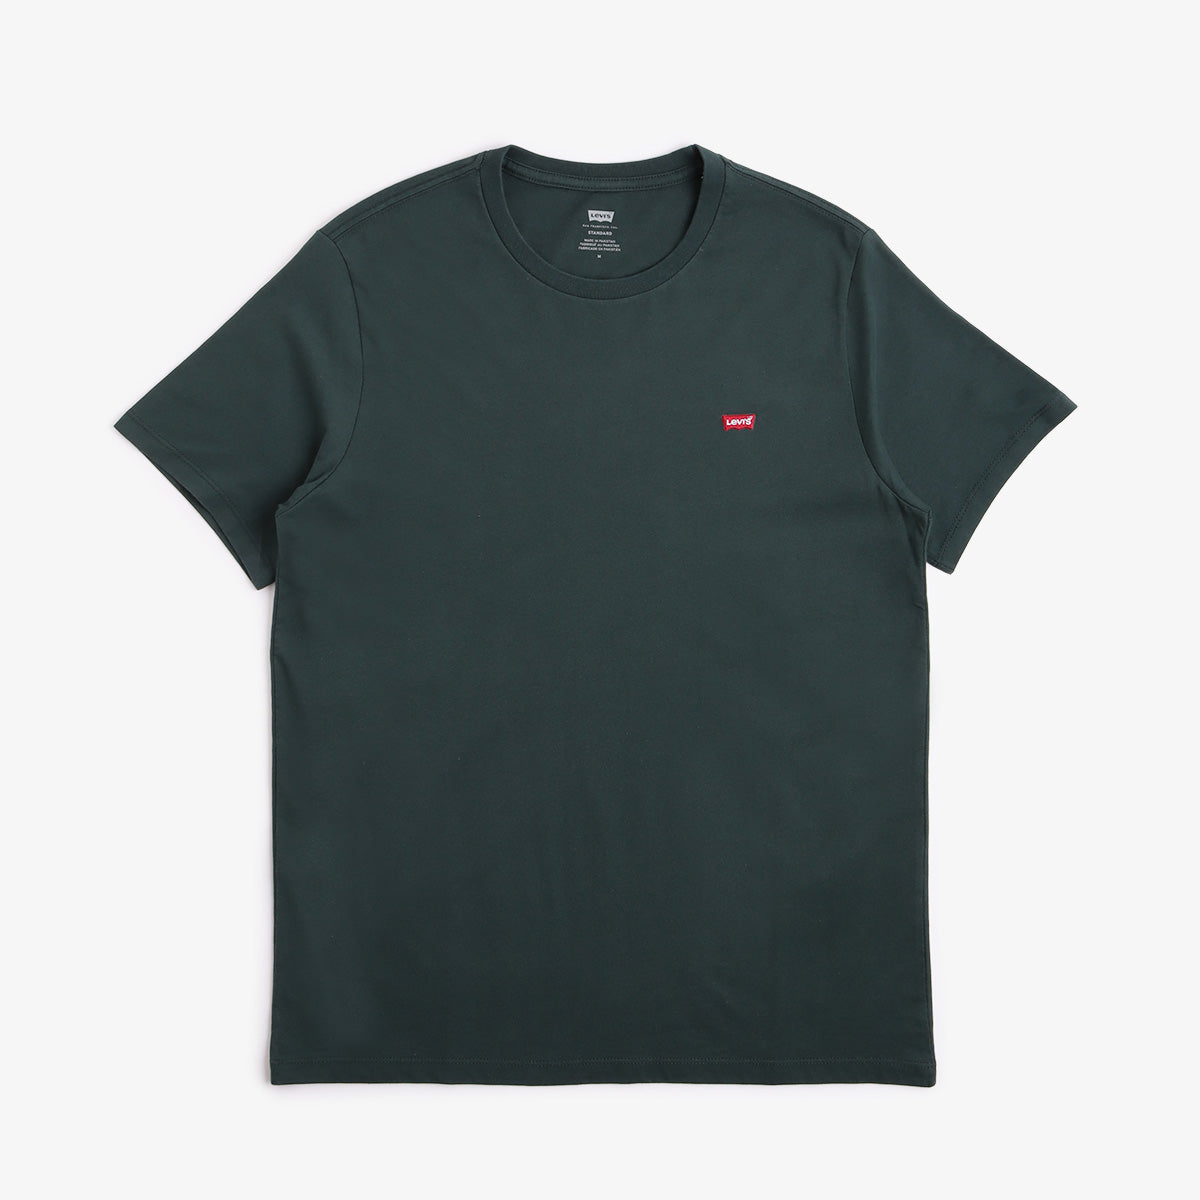 Levis Original Housemark T-Shirt, Darkest Spruce, Detail Shot 1